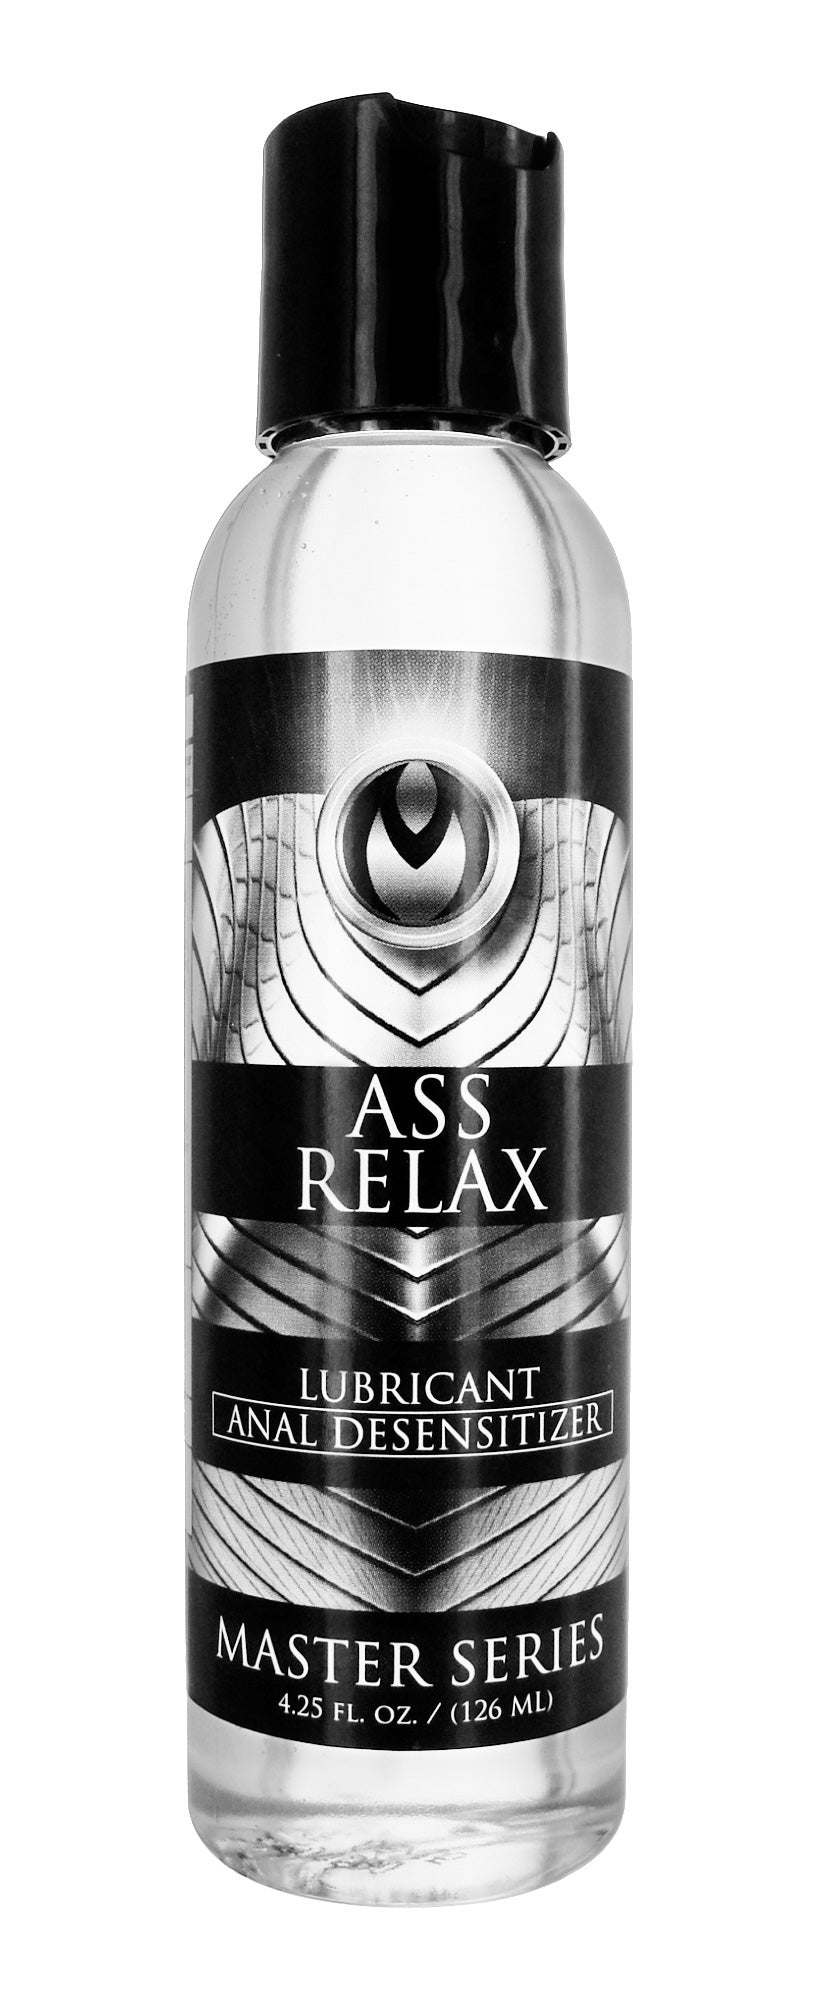 Ass relax lubricant anal desensitizer